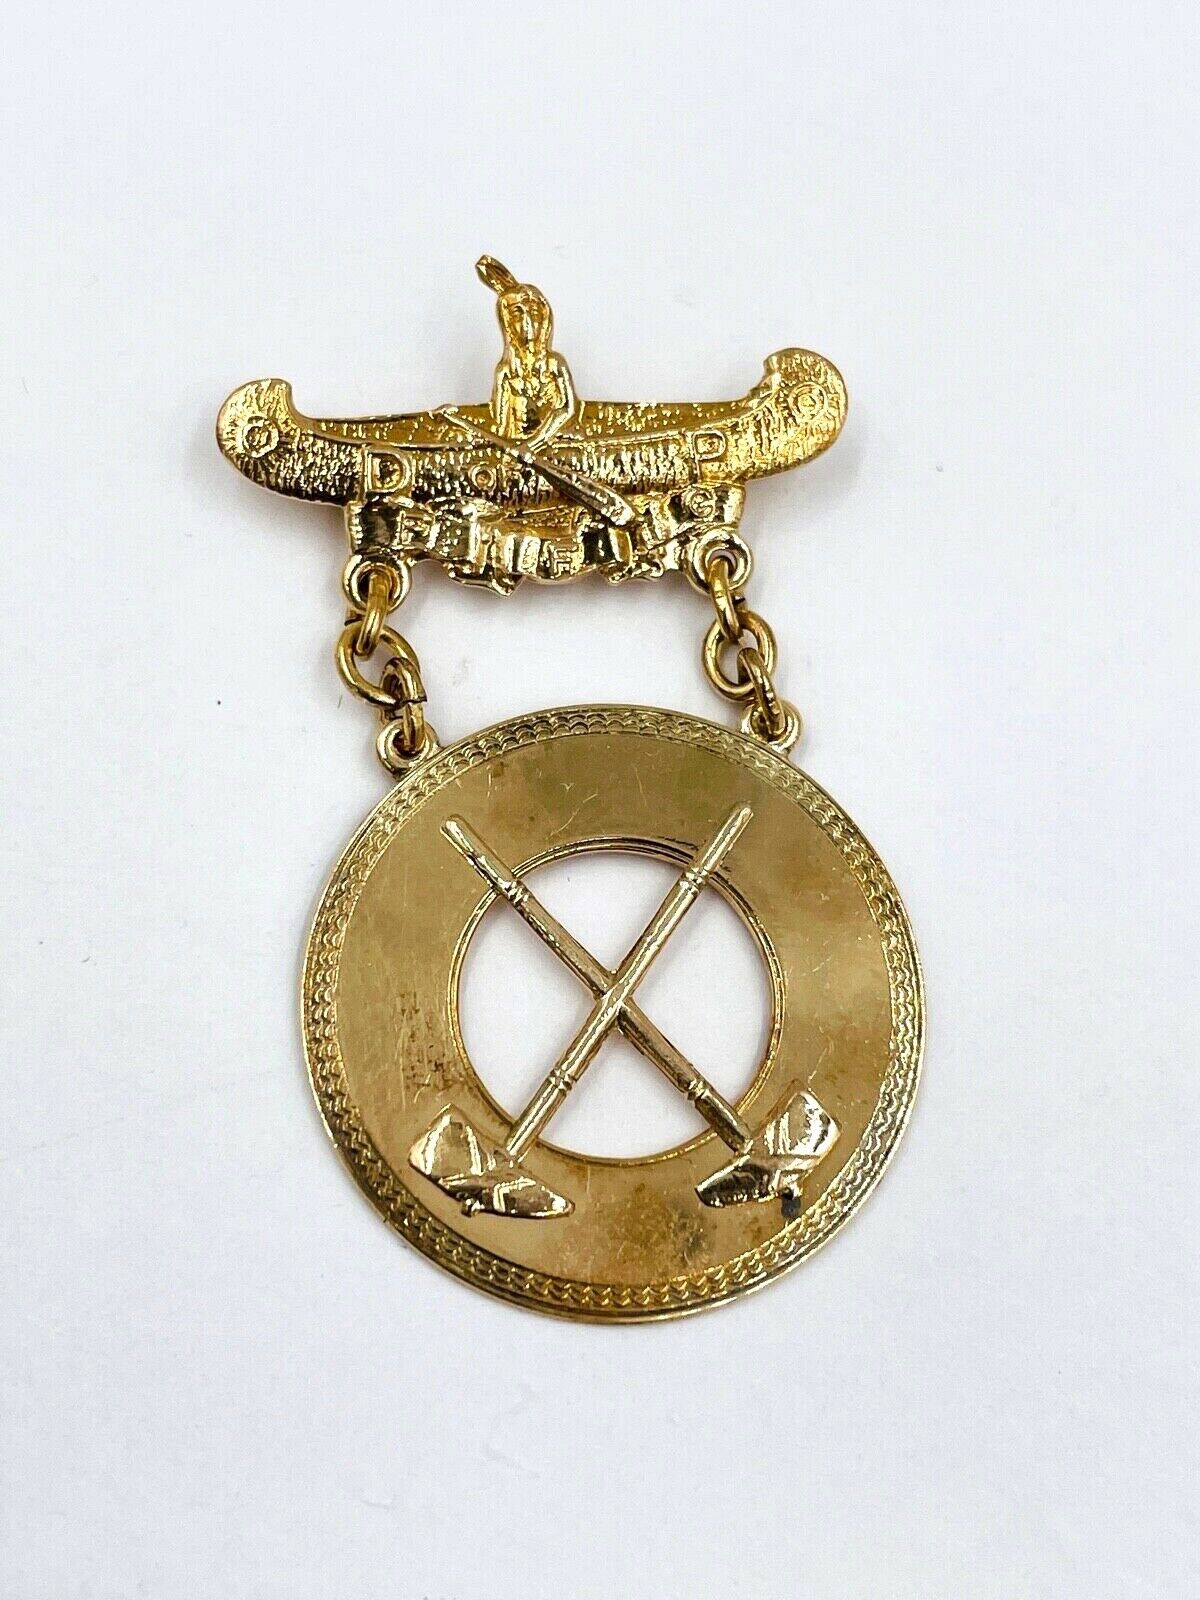 10k Rose gold D OF P Degree Of Pocahantas Pin Badge - Improved Order of Red Men